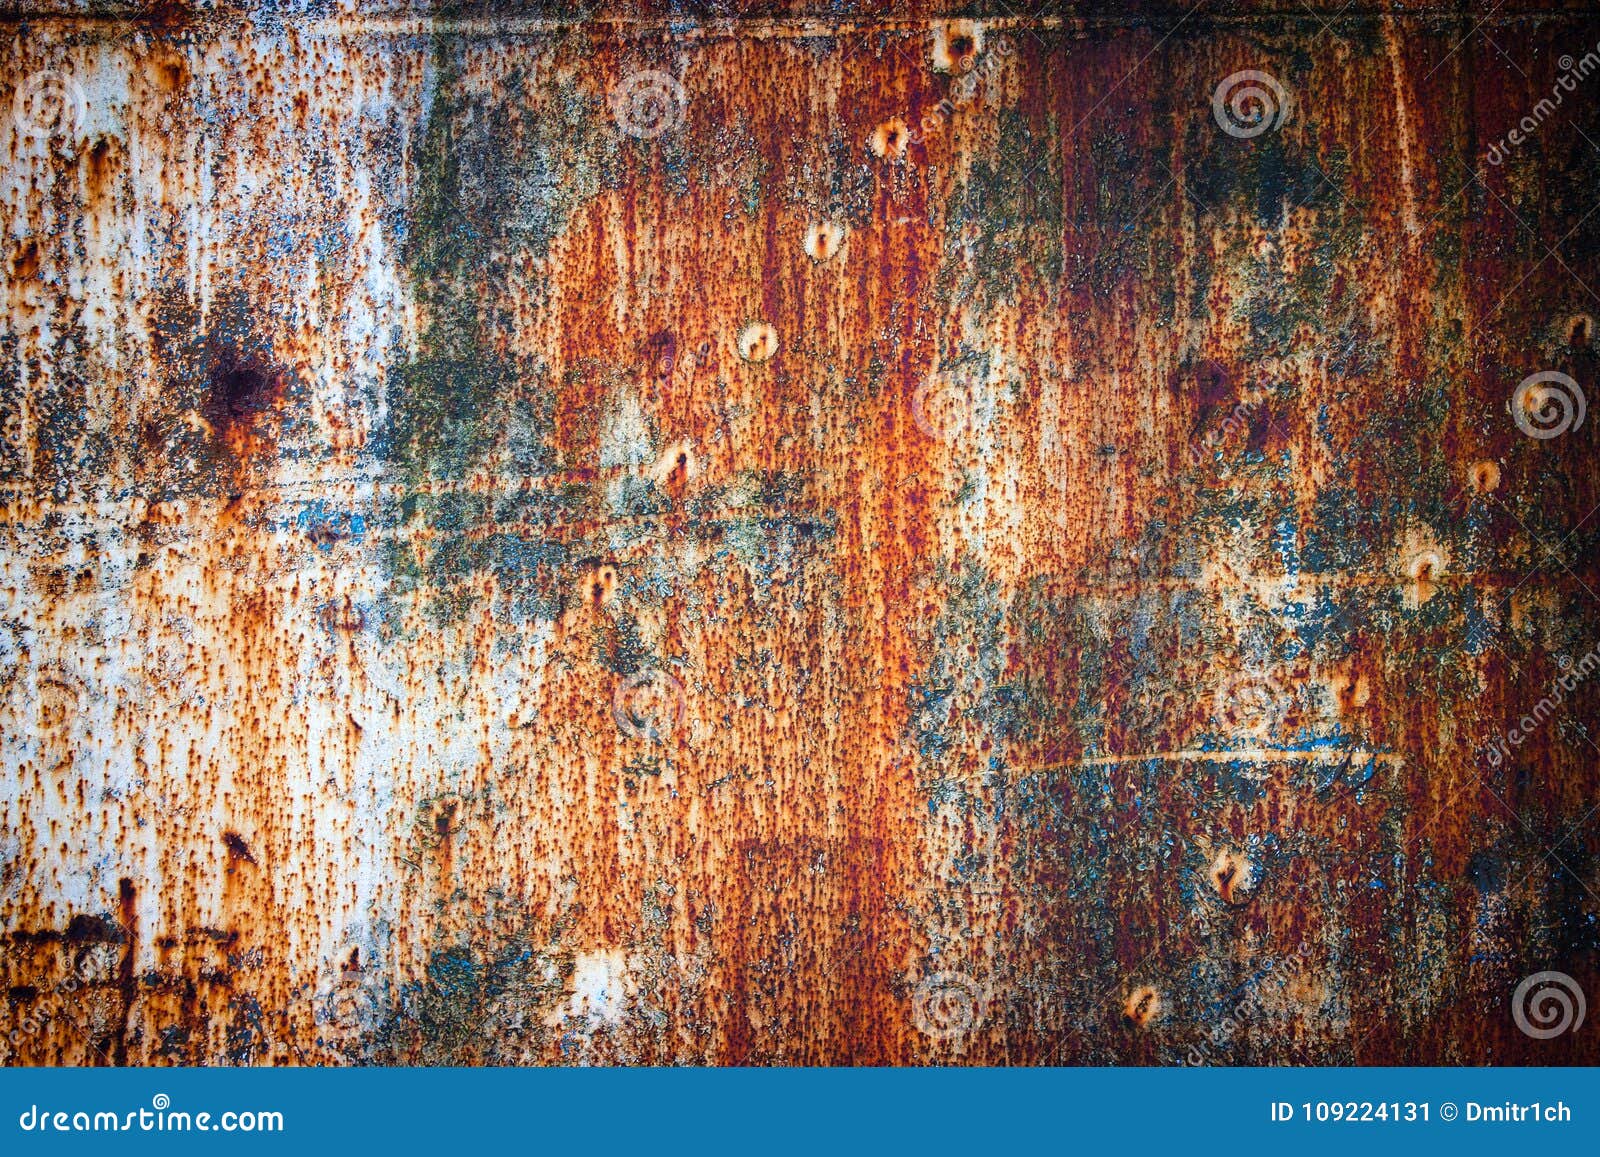 Can sheet metal rust фото 106